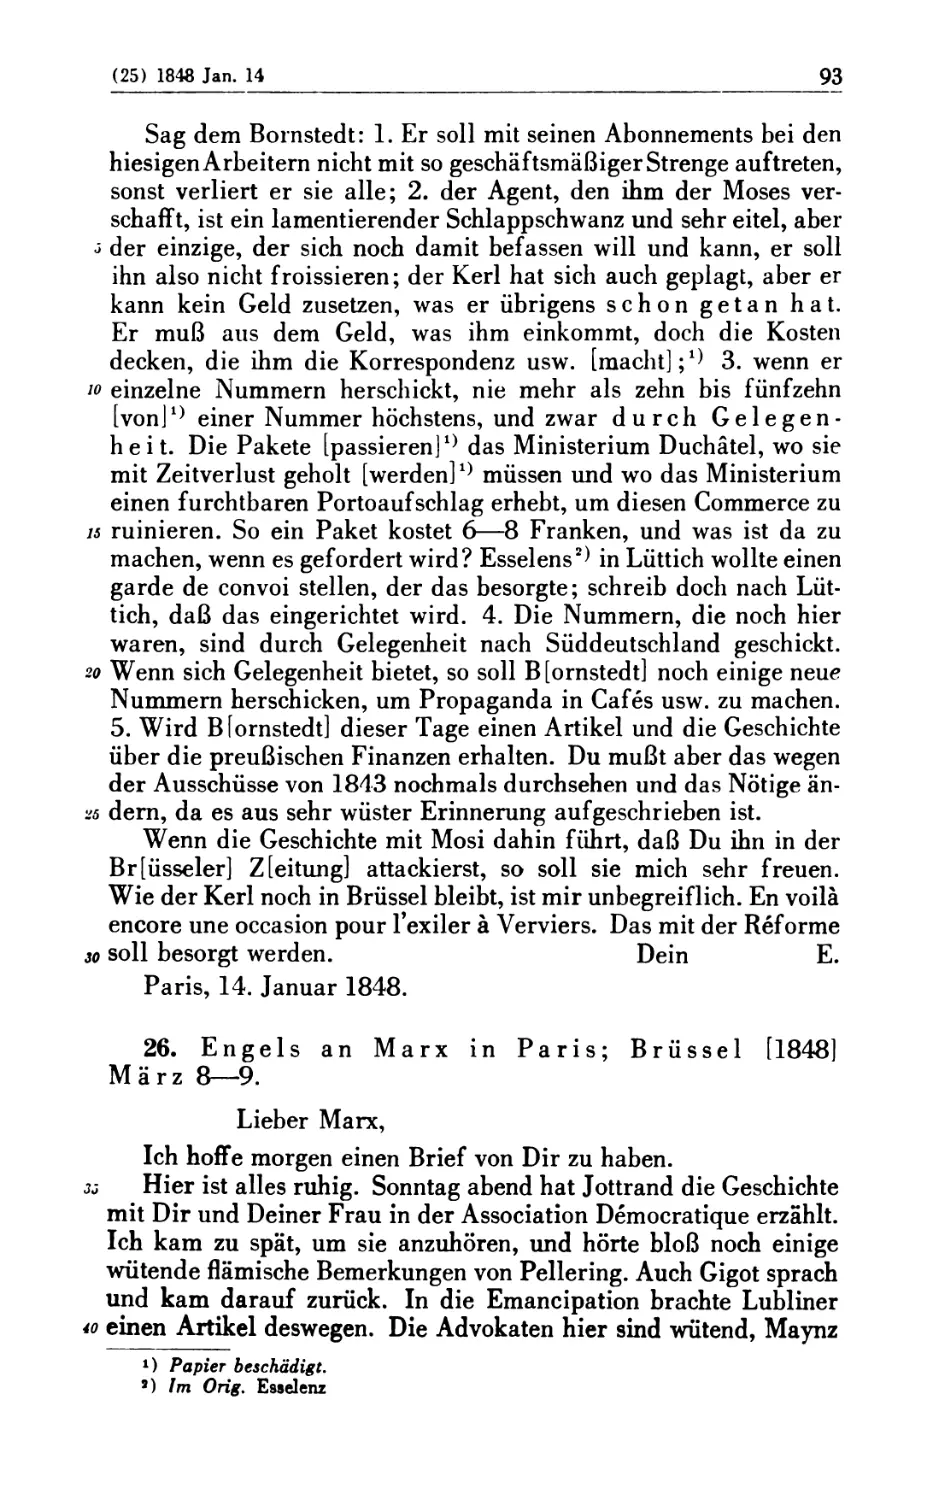 26. Engels an Marx in Paris; Brüssel [1848] März 8—9